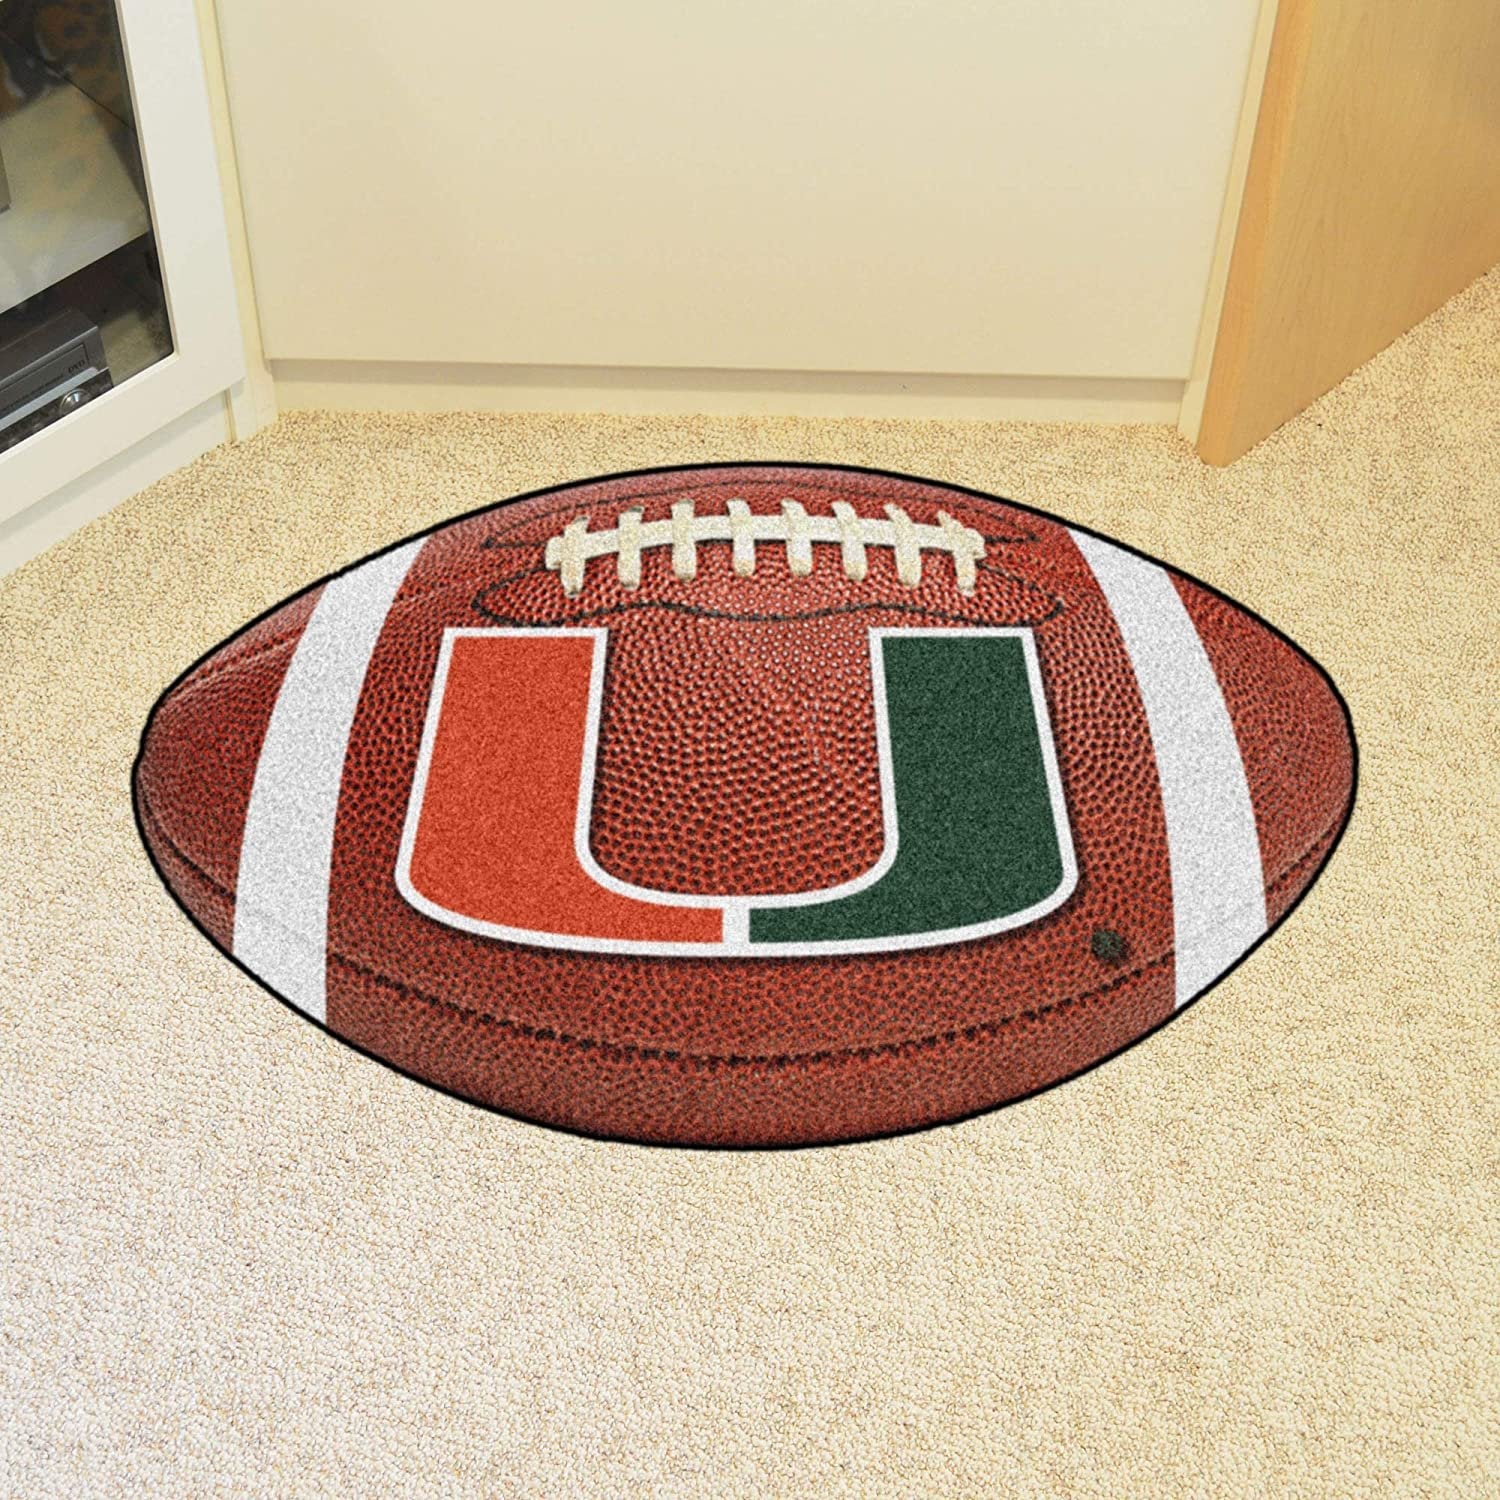 University of Miami Hurricanes Floor Mat Area Rug, 20x32 Inch, Non-Skid Backing, Football Design